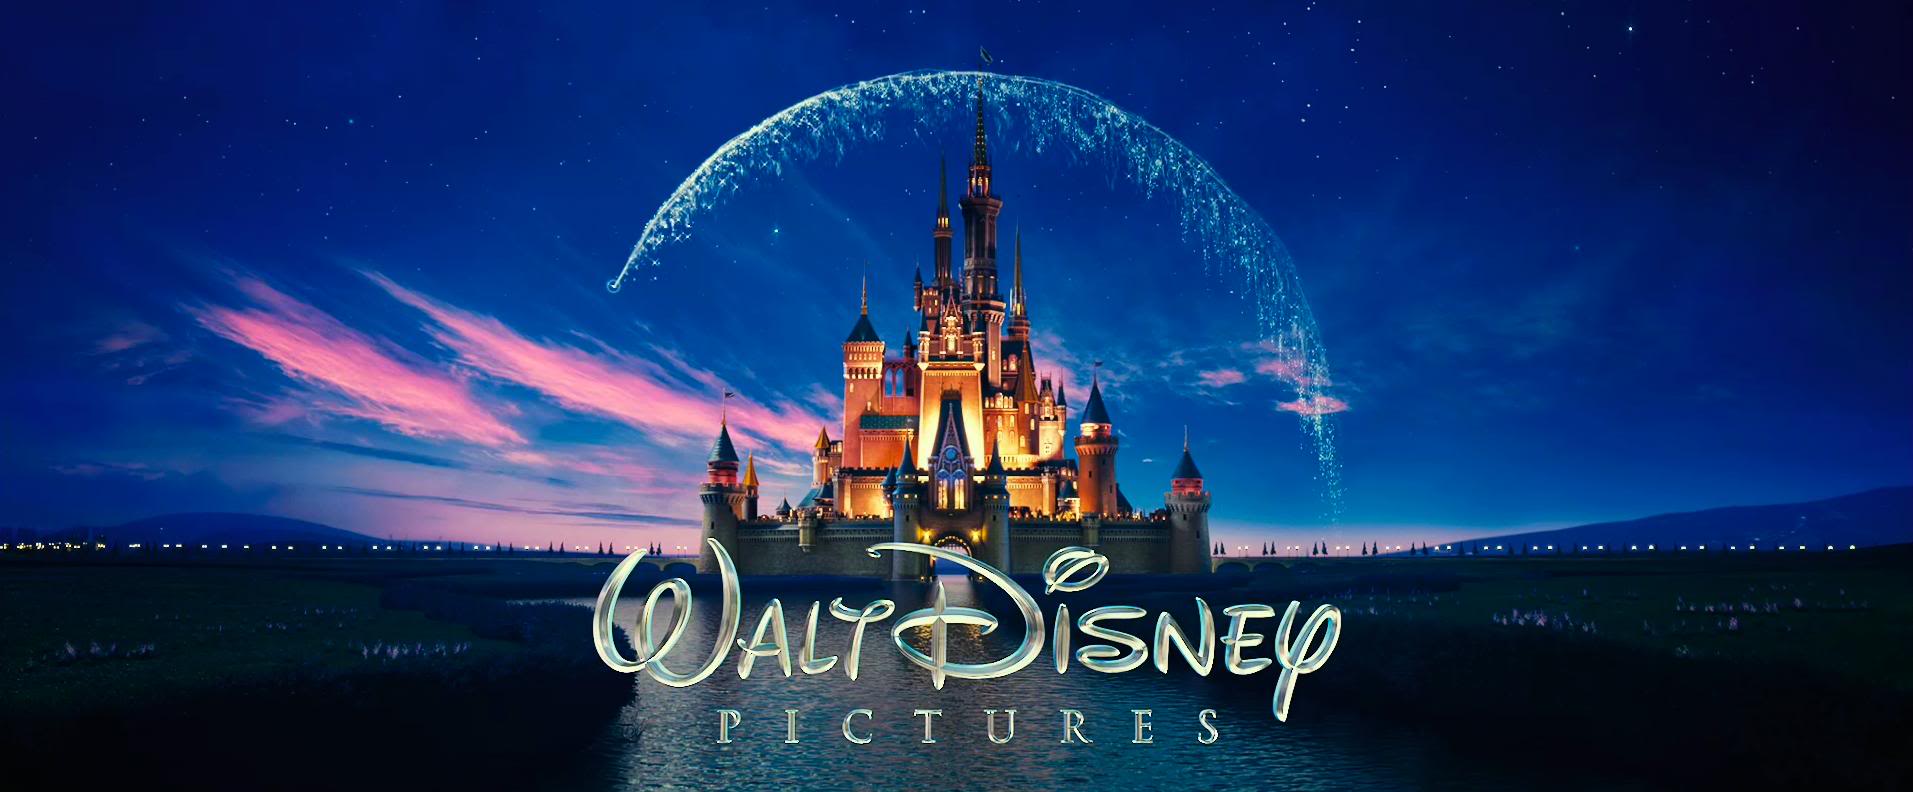 Disney Films Logo - Starting In Disney Films Won't Be Going To Netflix